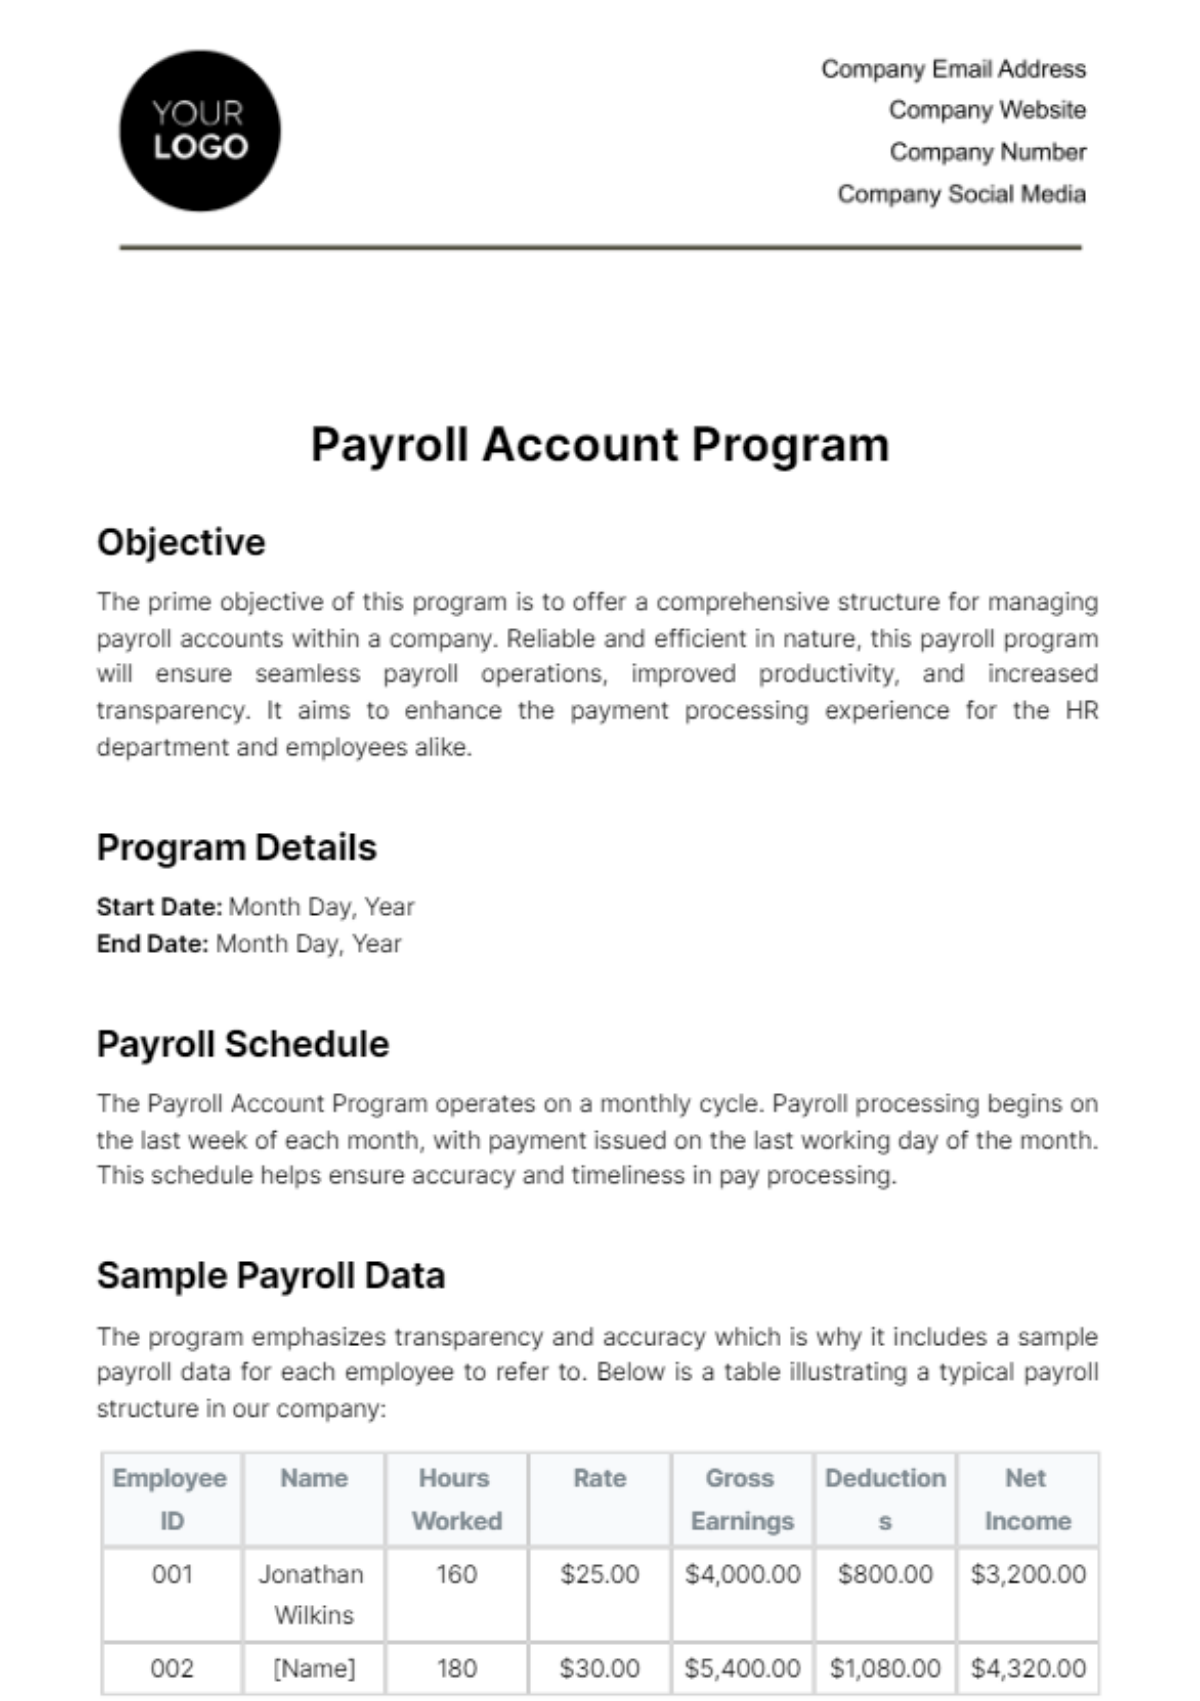 Free Payroll Account Program Template